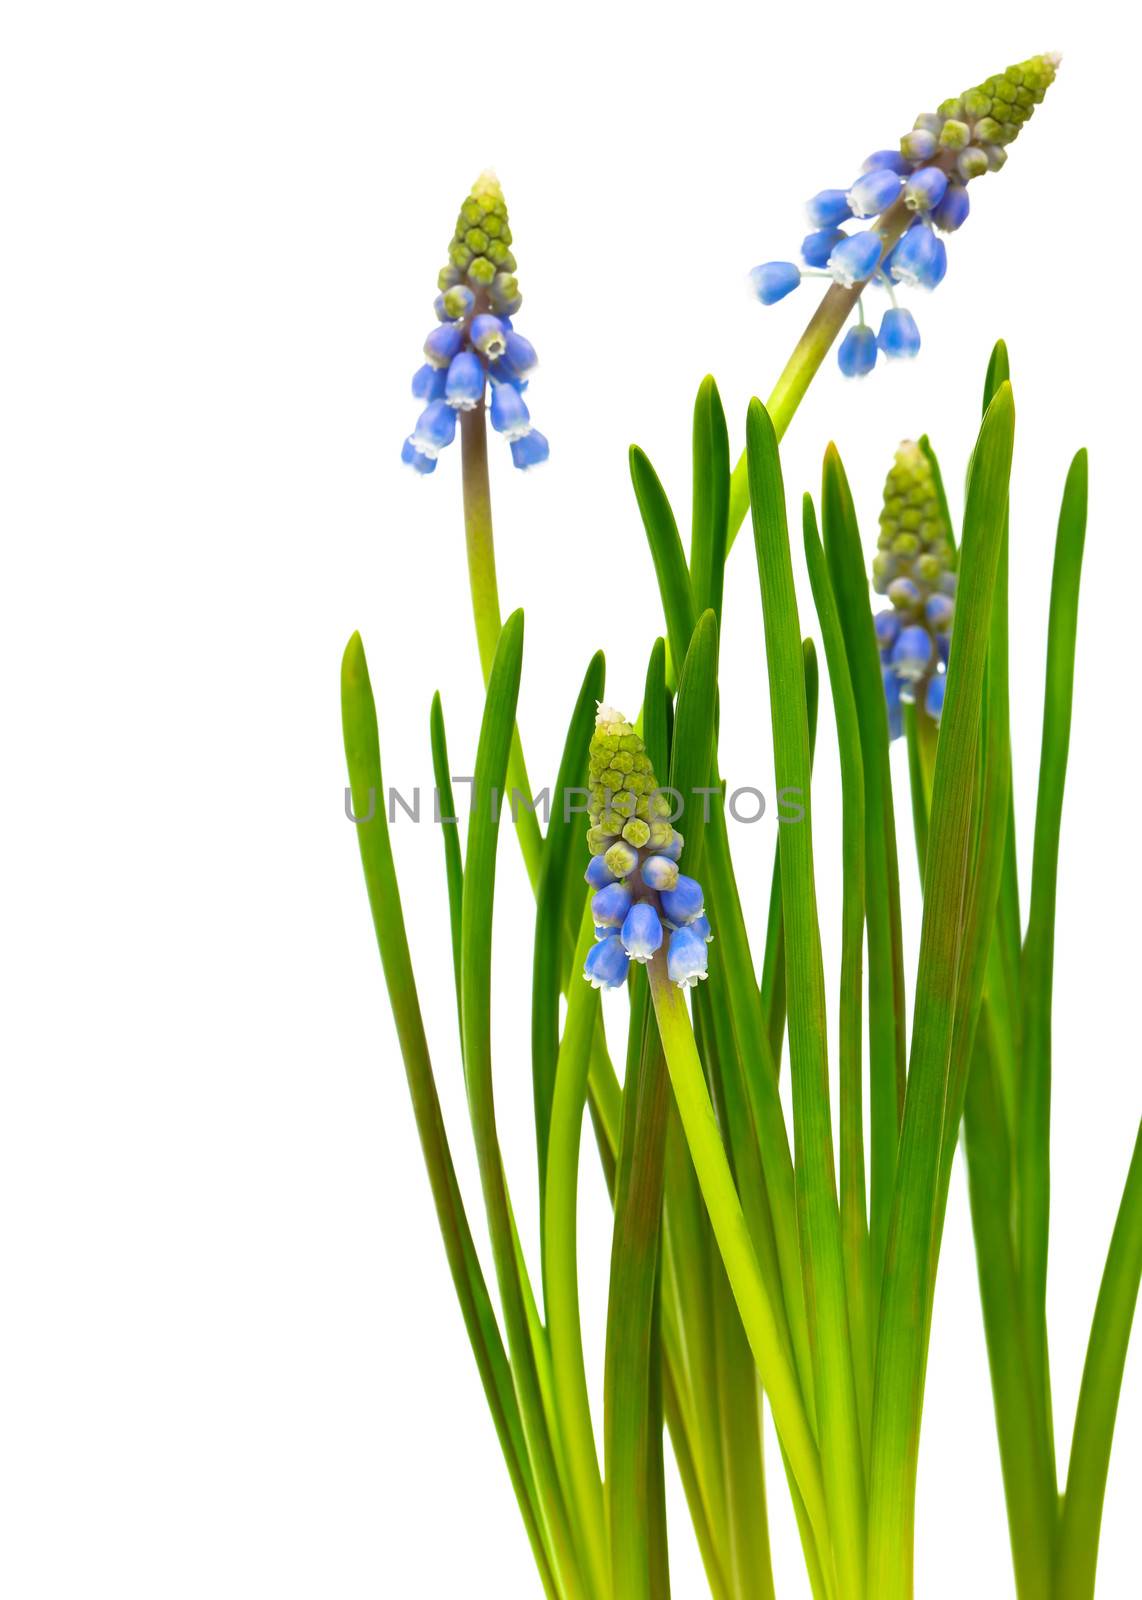 Bluebells flower (Grape Hyacinth, Muscari armeniacum) by motorolka